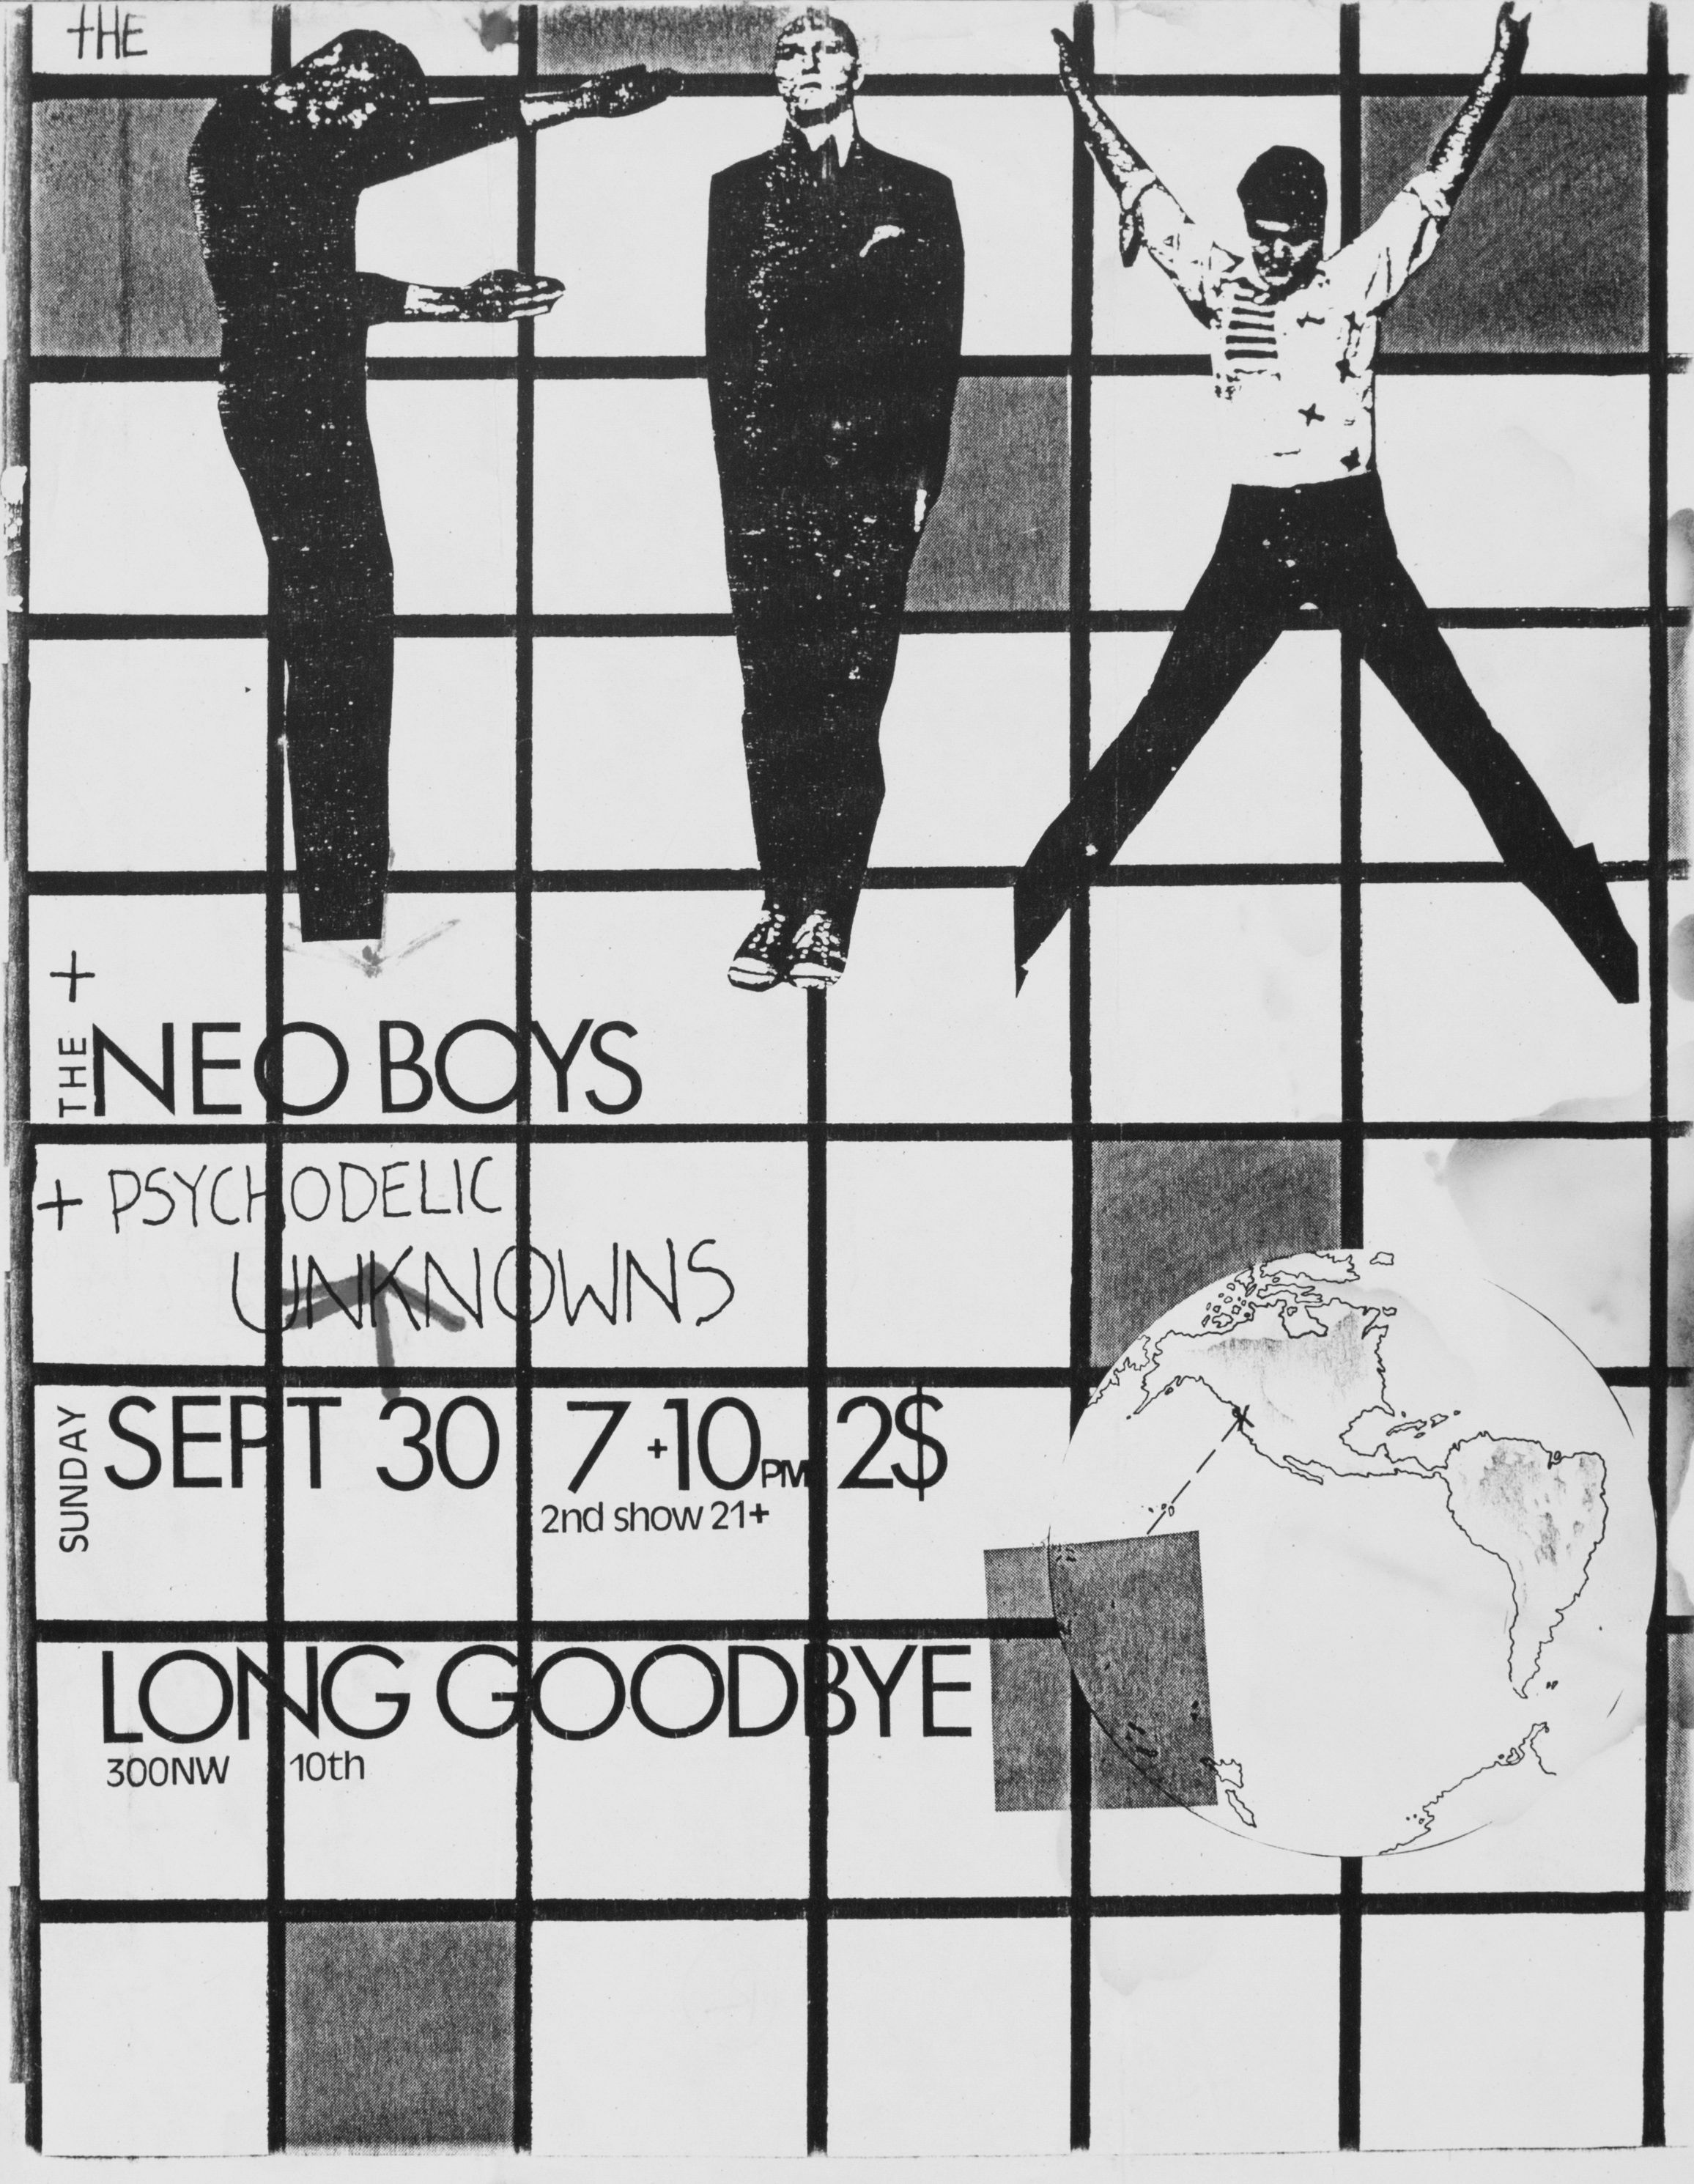 MXP-43.11 The Fix 1979 Long Goodbye Concert Poster